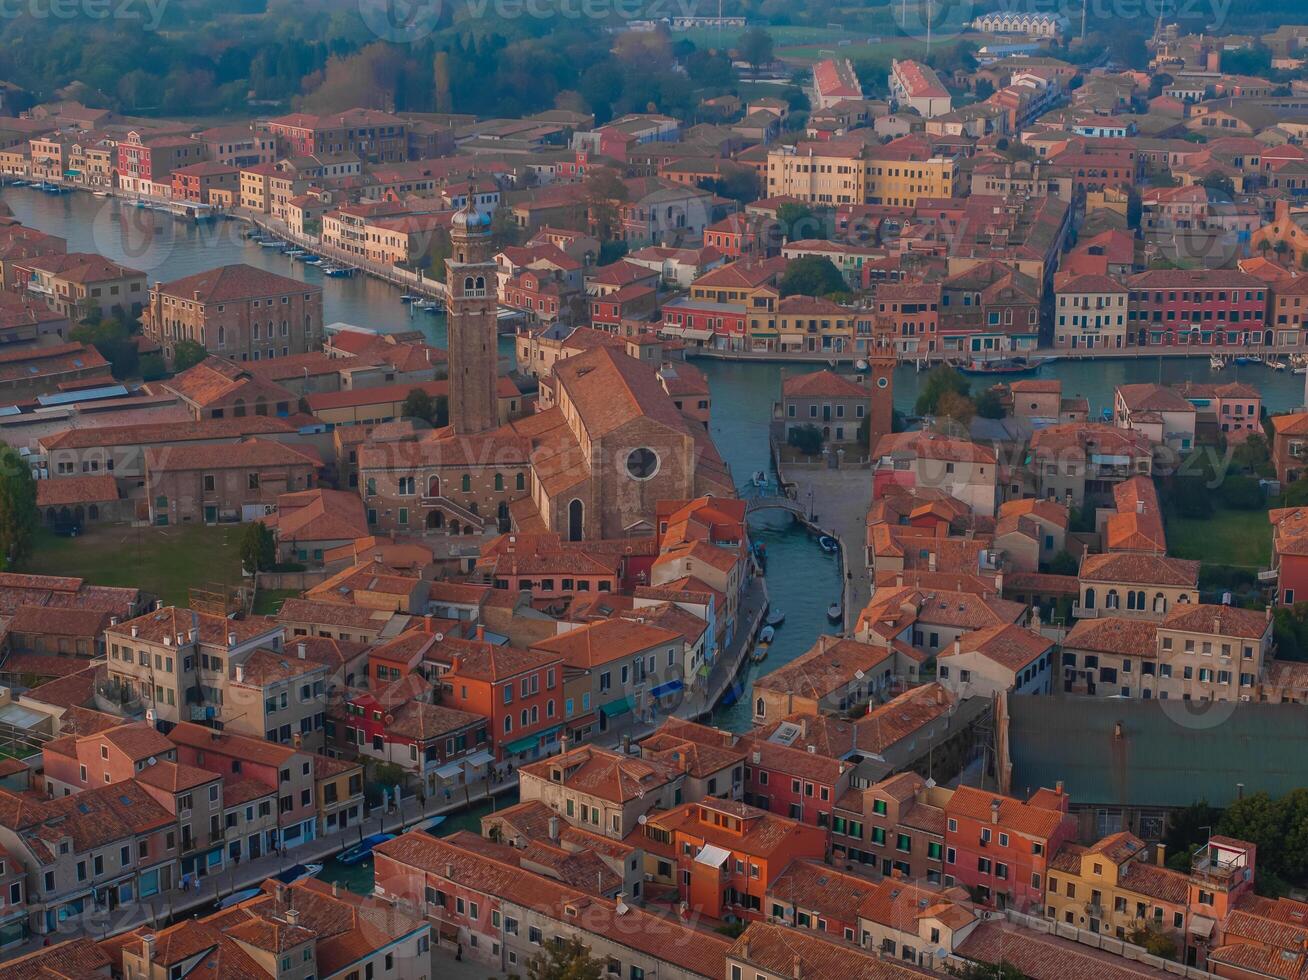 aéreo ver de Murano isla en Venecia laguna, Italia foto